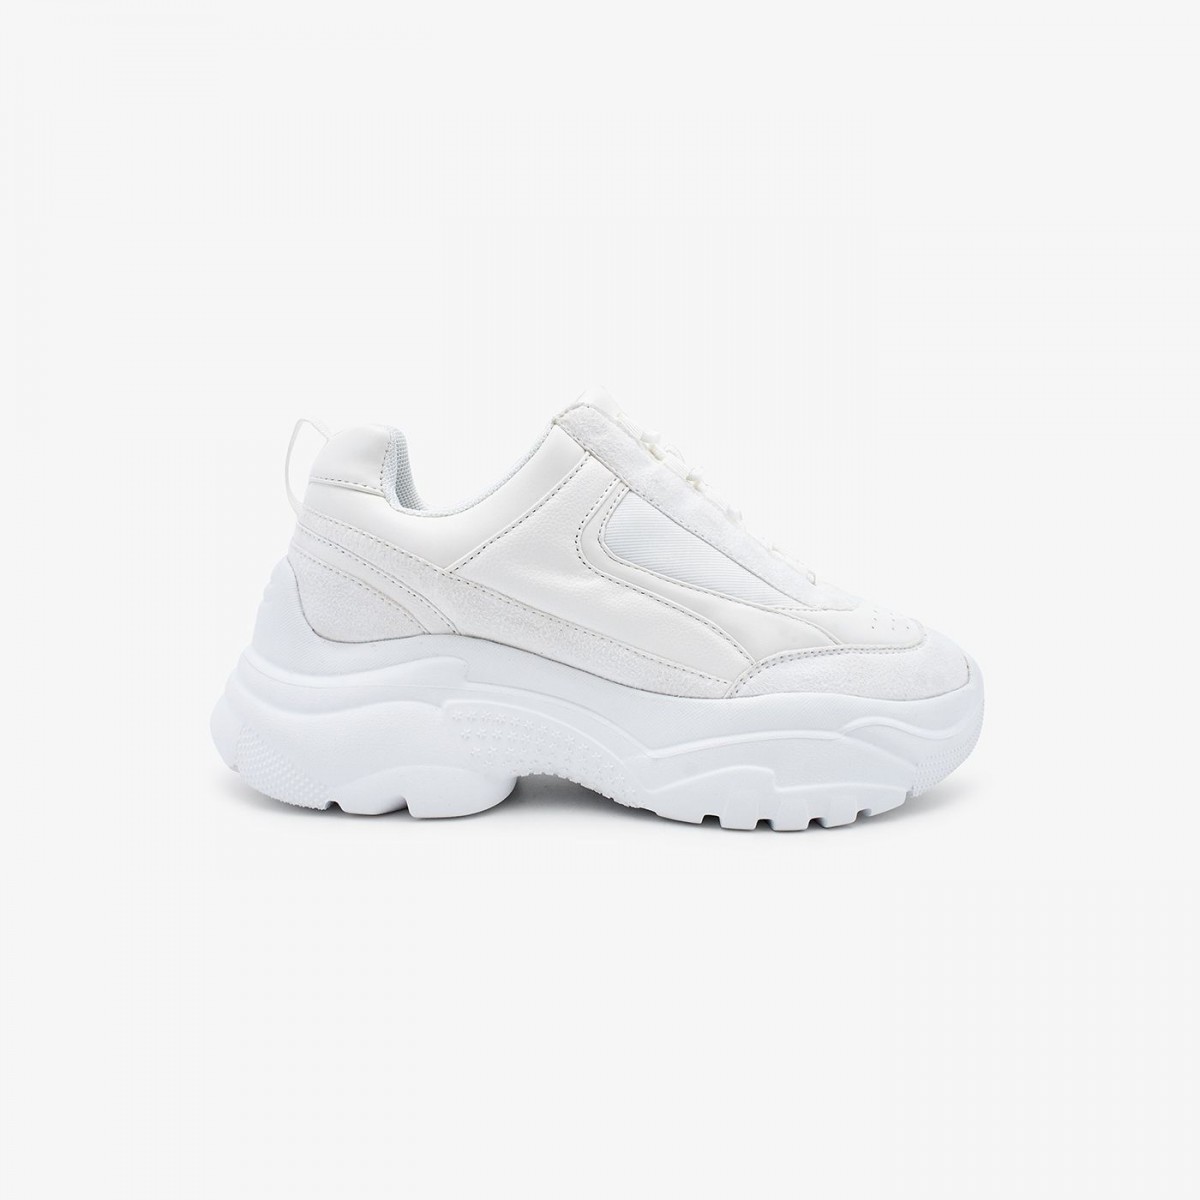 /2019/08/reeva-women-casual-sneakers-rv-sm-0448-white-image2.jpeg